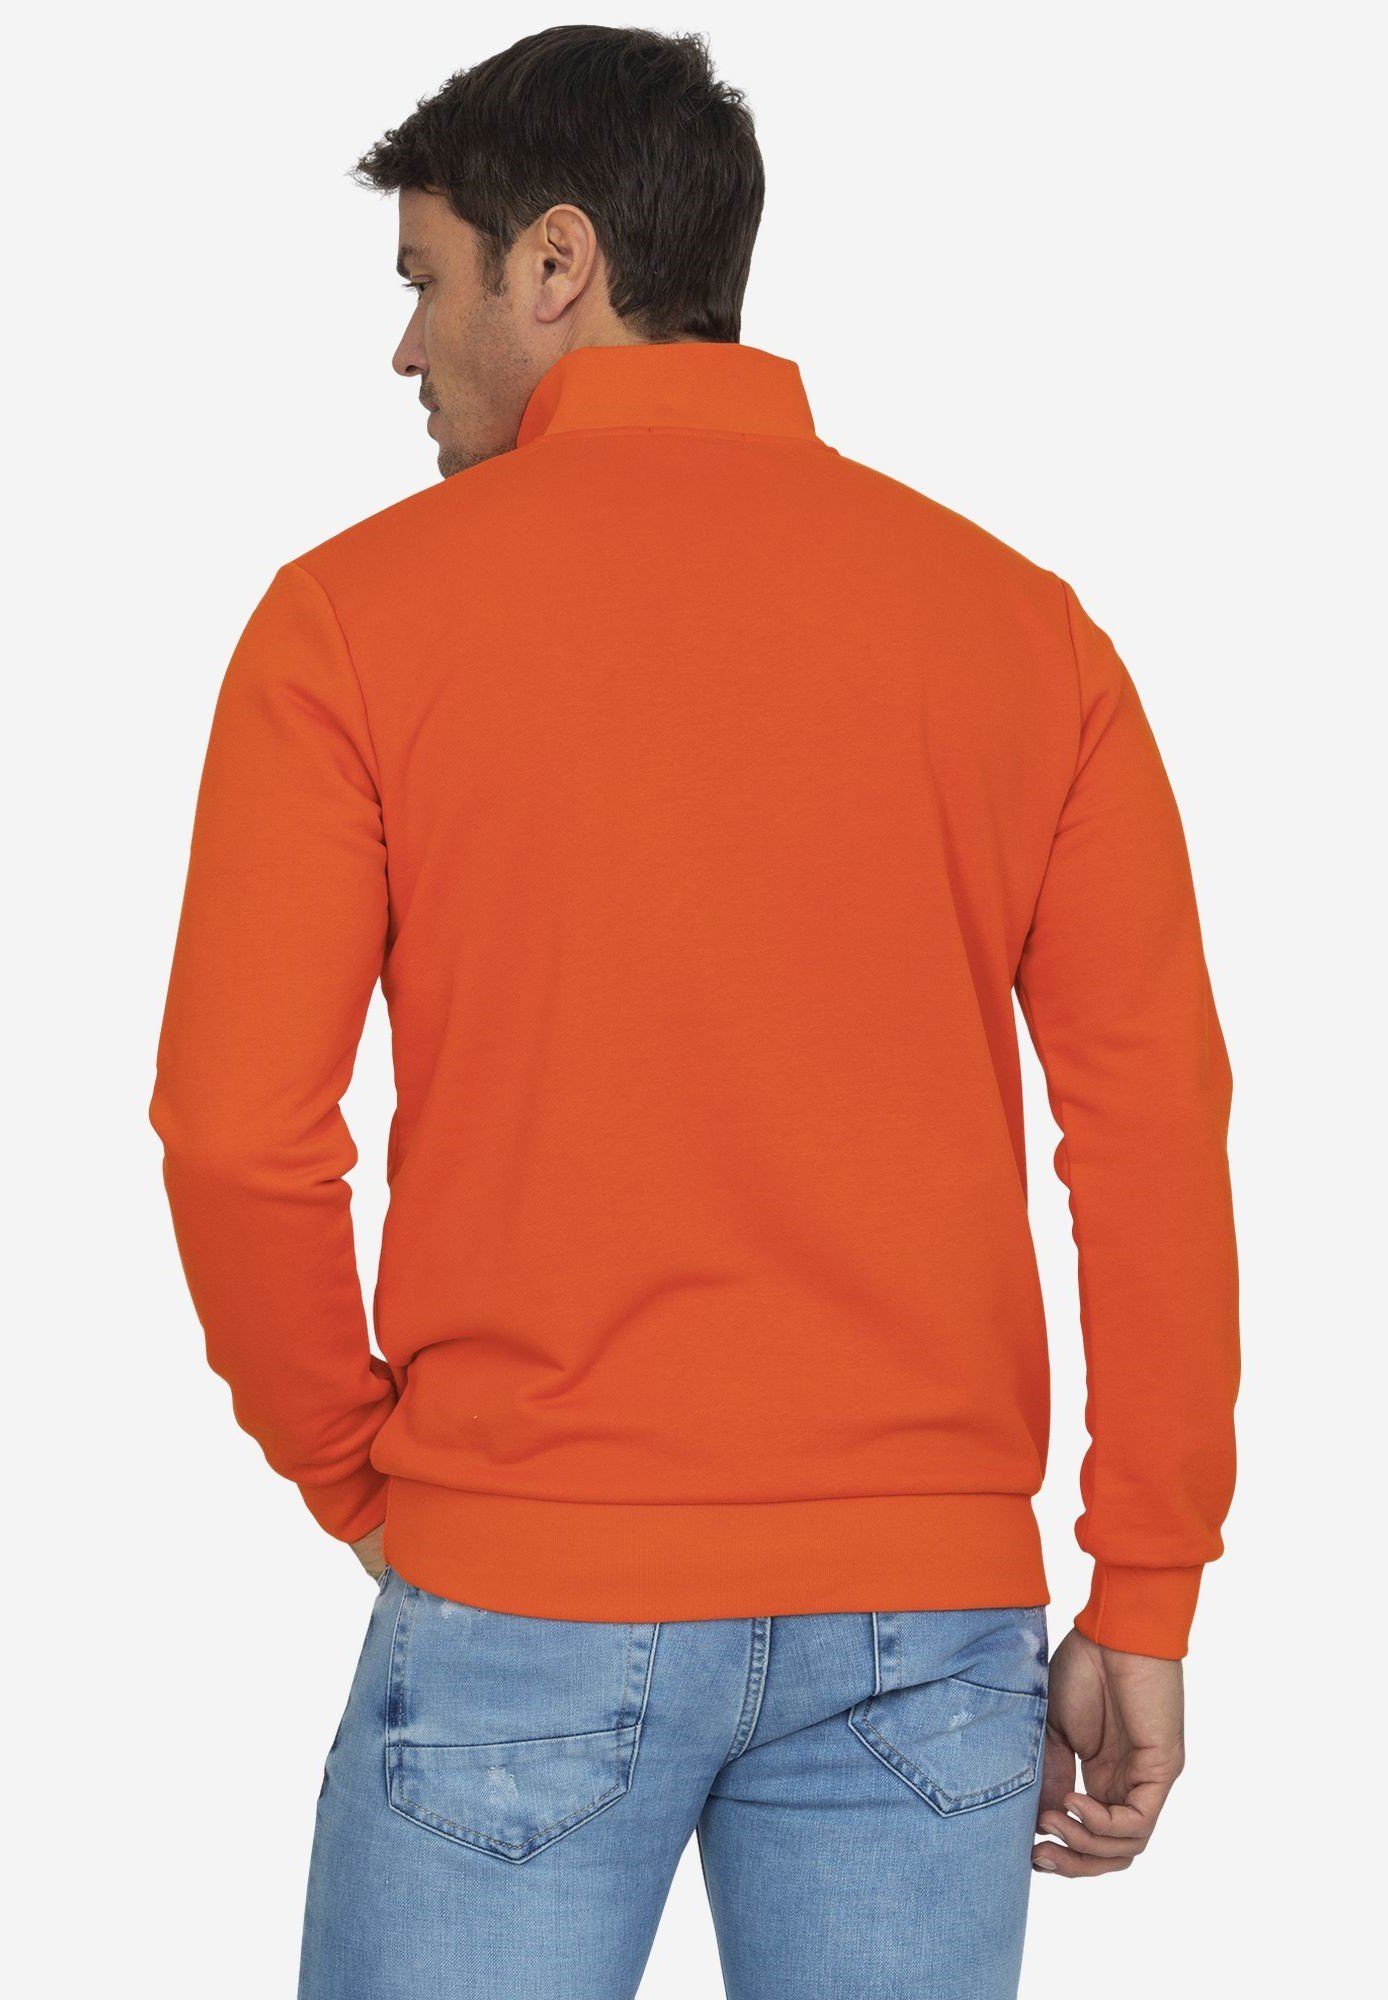 Tailor Sir Hanico Sweatshirt Orange Raymond